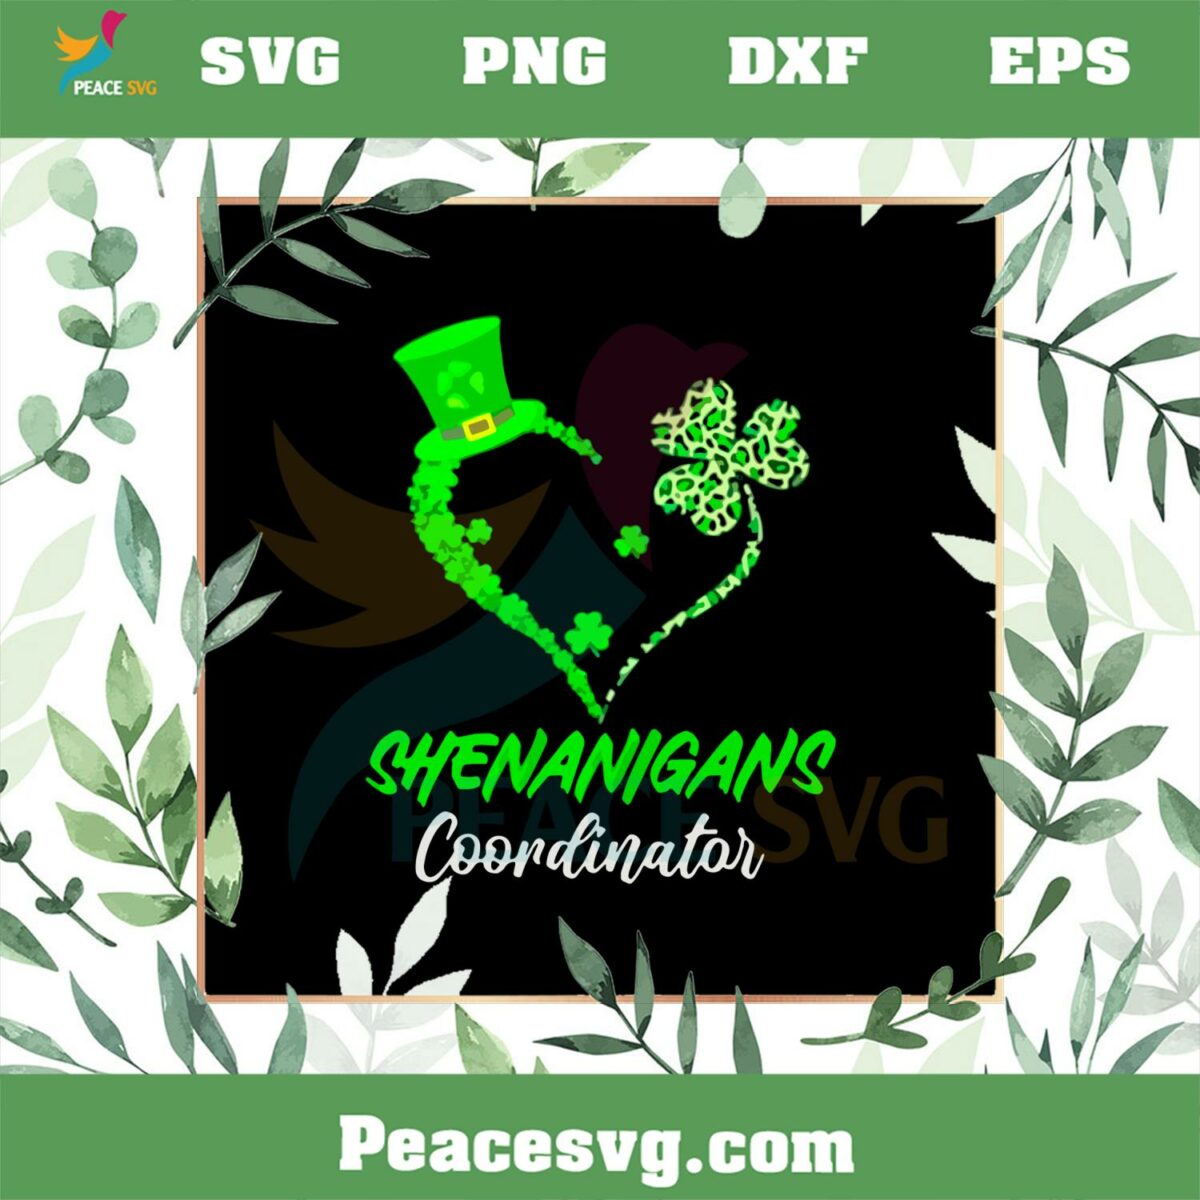 Shenanigans Coordinator Green Heart SVG St Patrick’s Day Svg